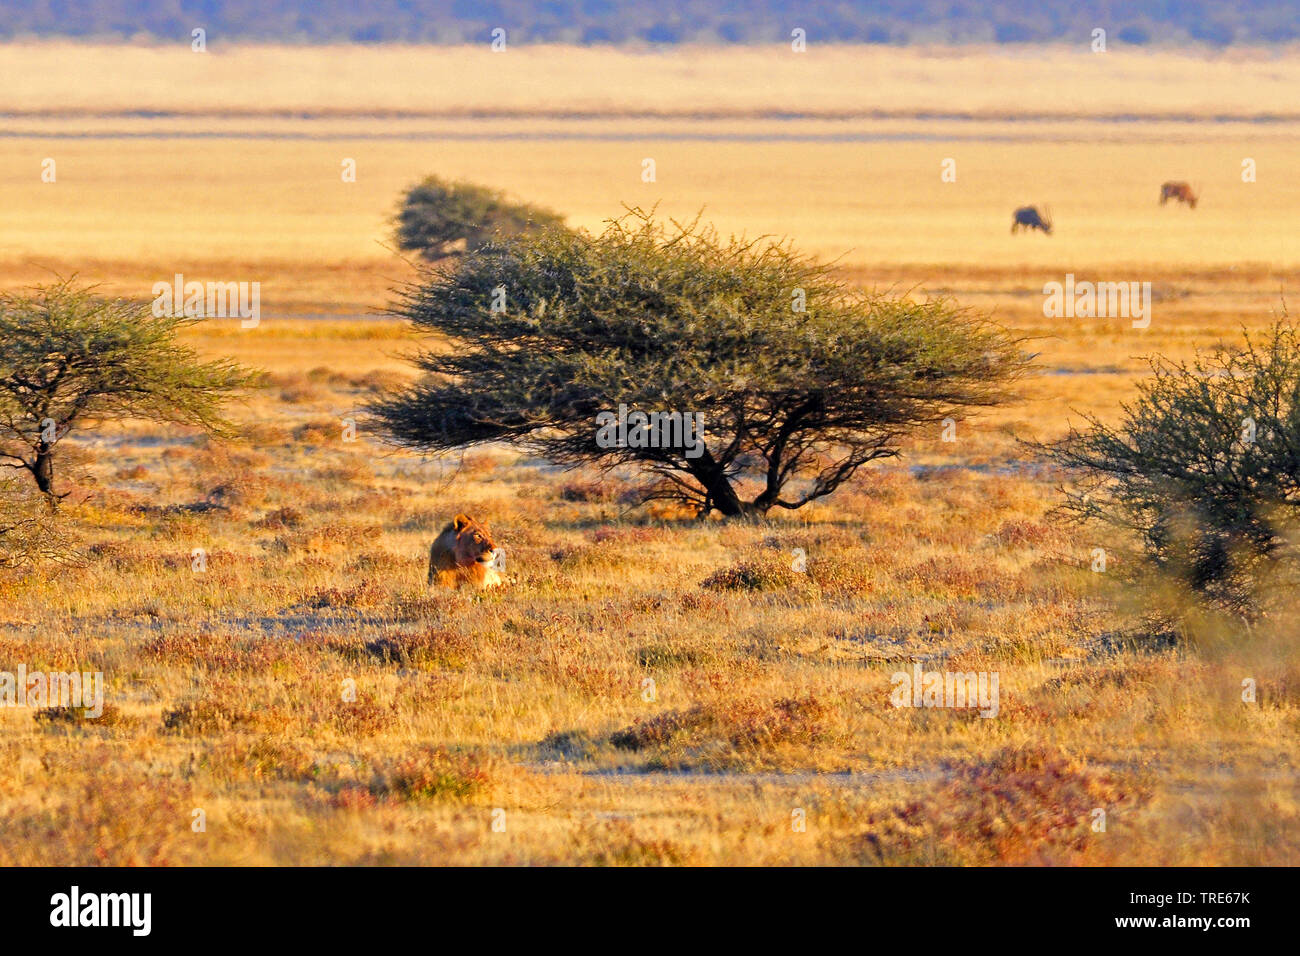 lion (Panthera leo), male lion in savanna, Namibia Stock Photo